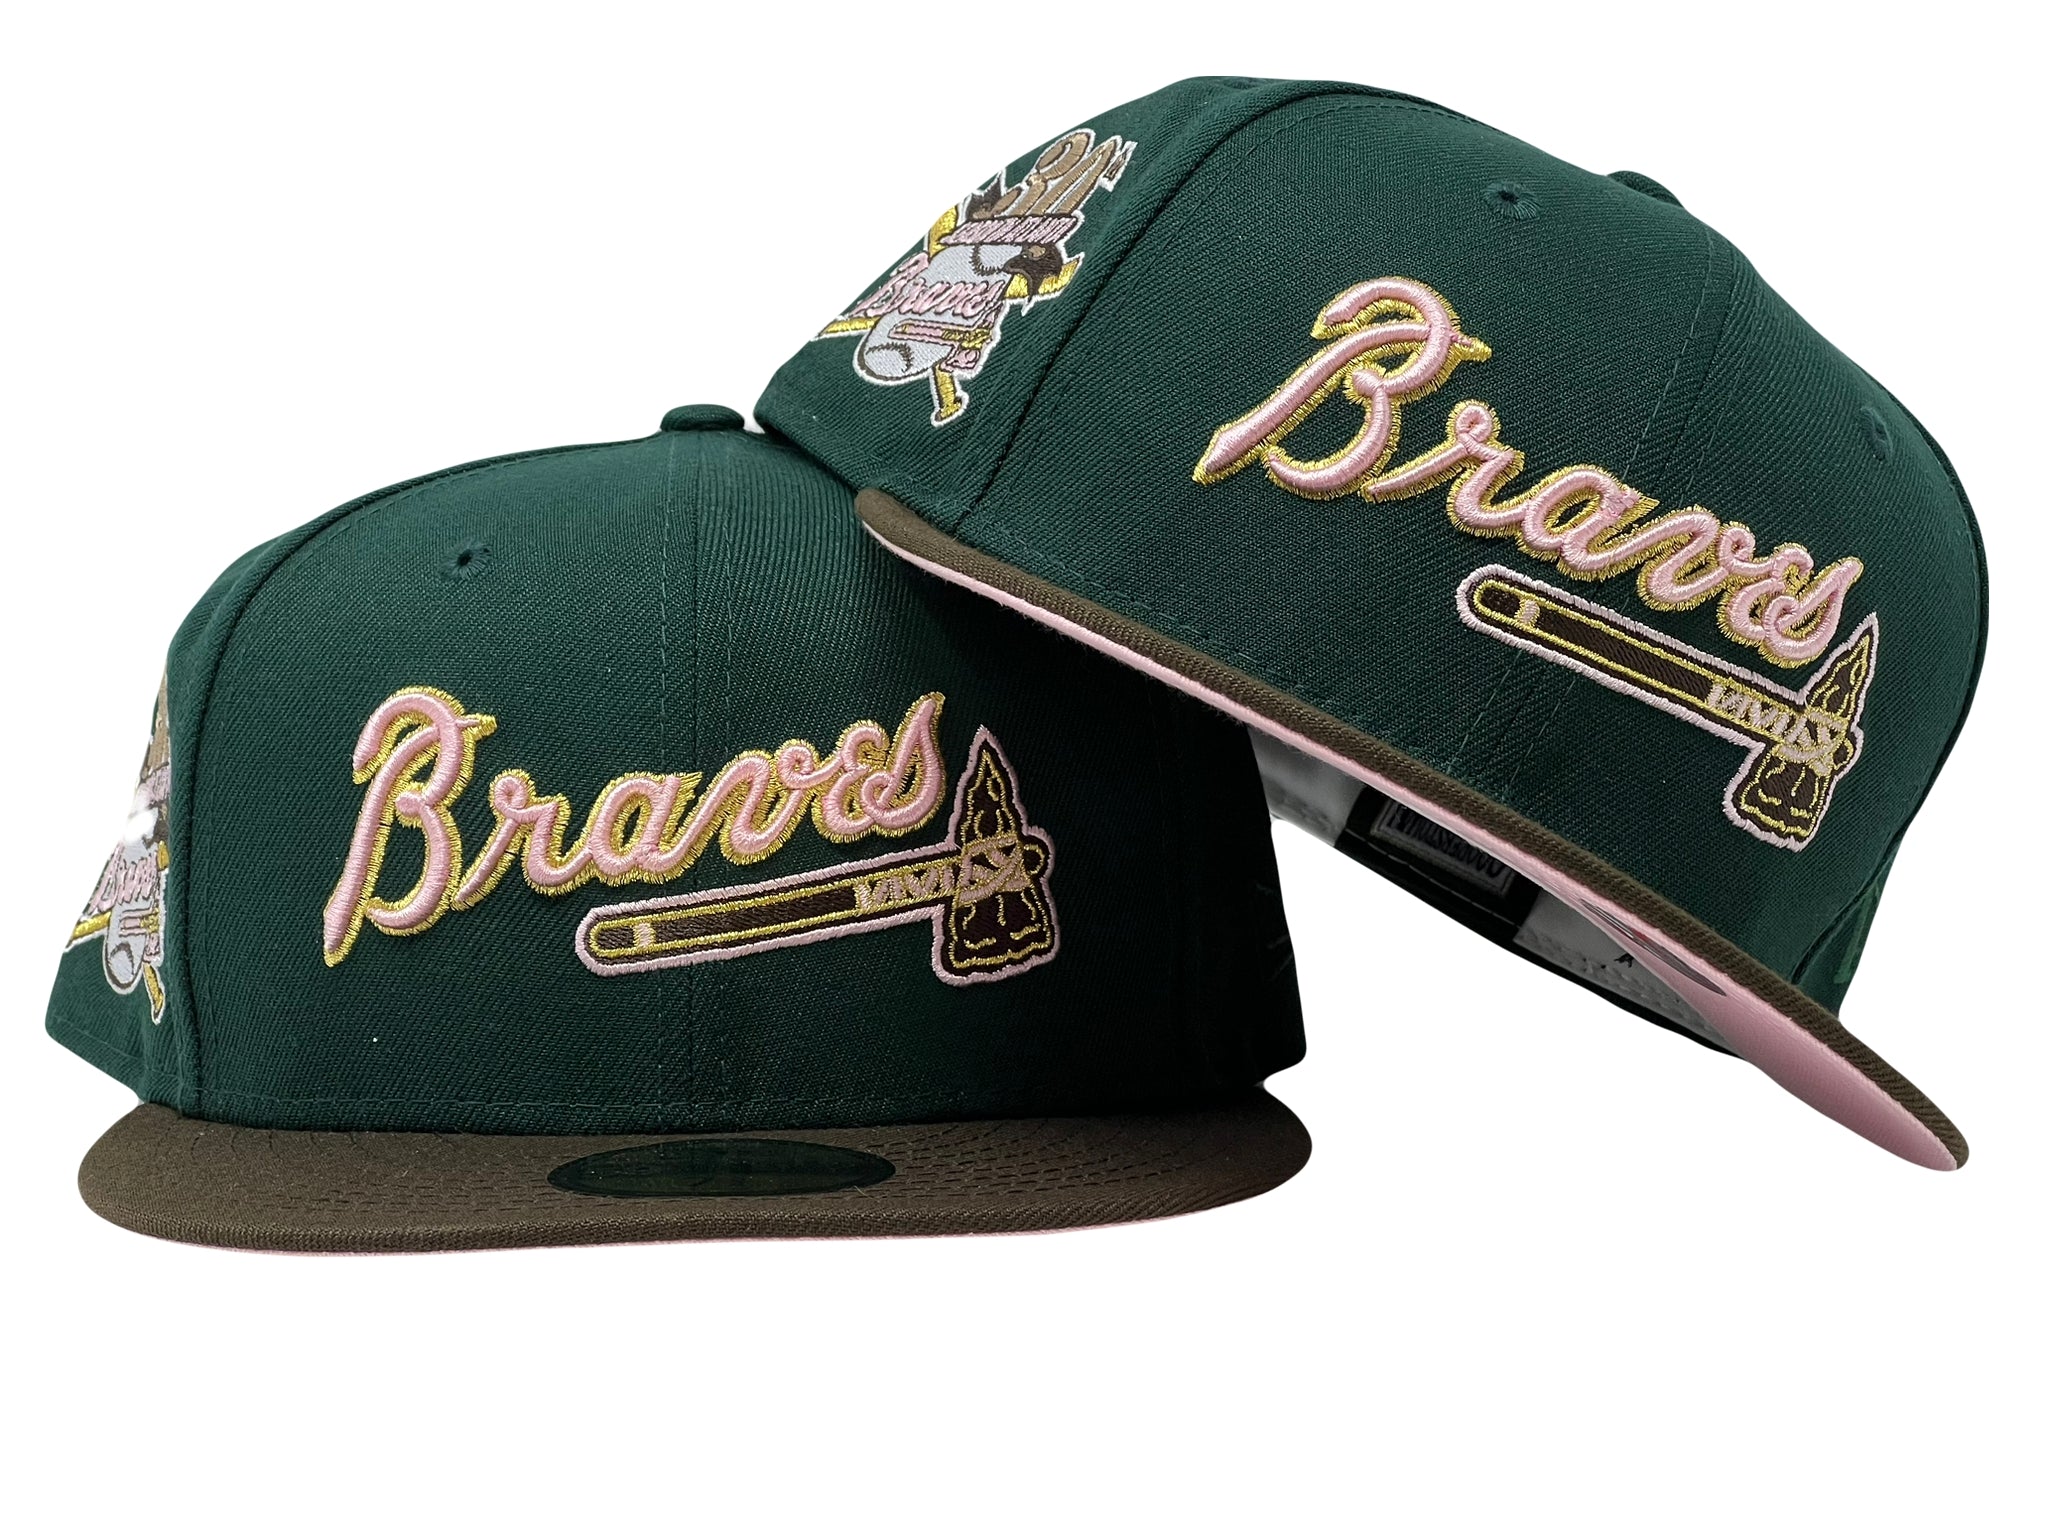 New Era 59FIFTY Atlanta Braves Fitted Hat Dark Green White